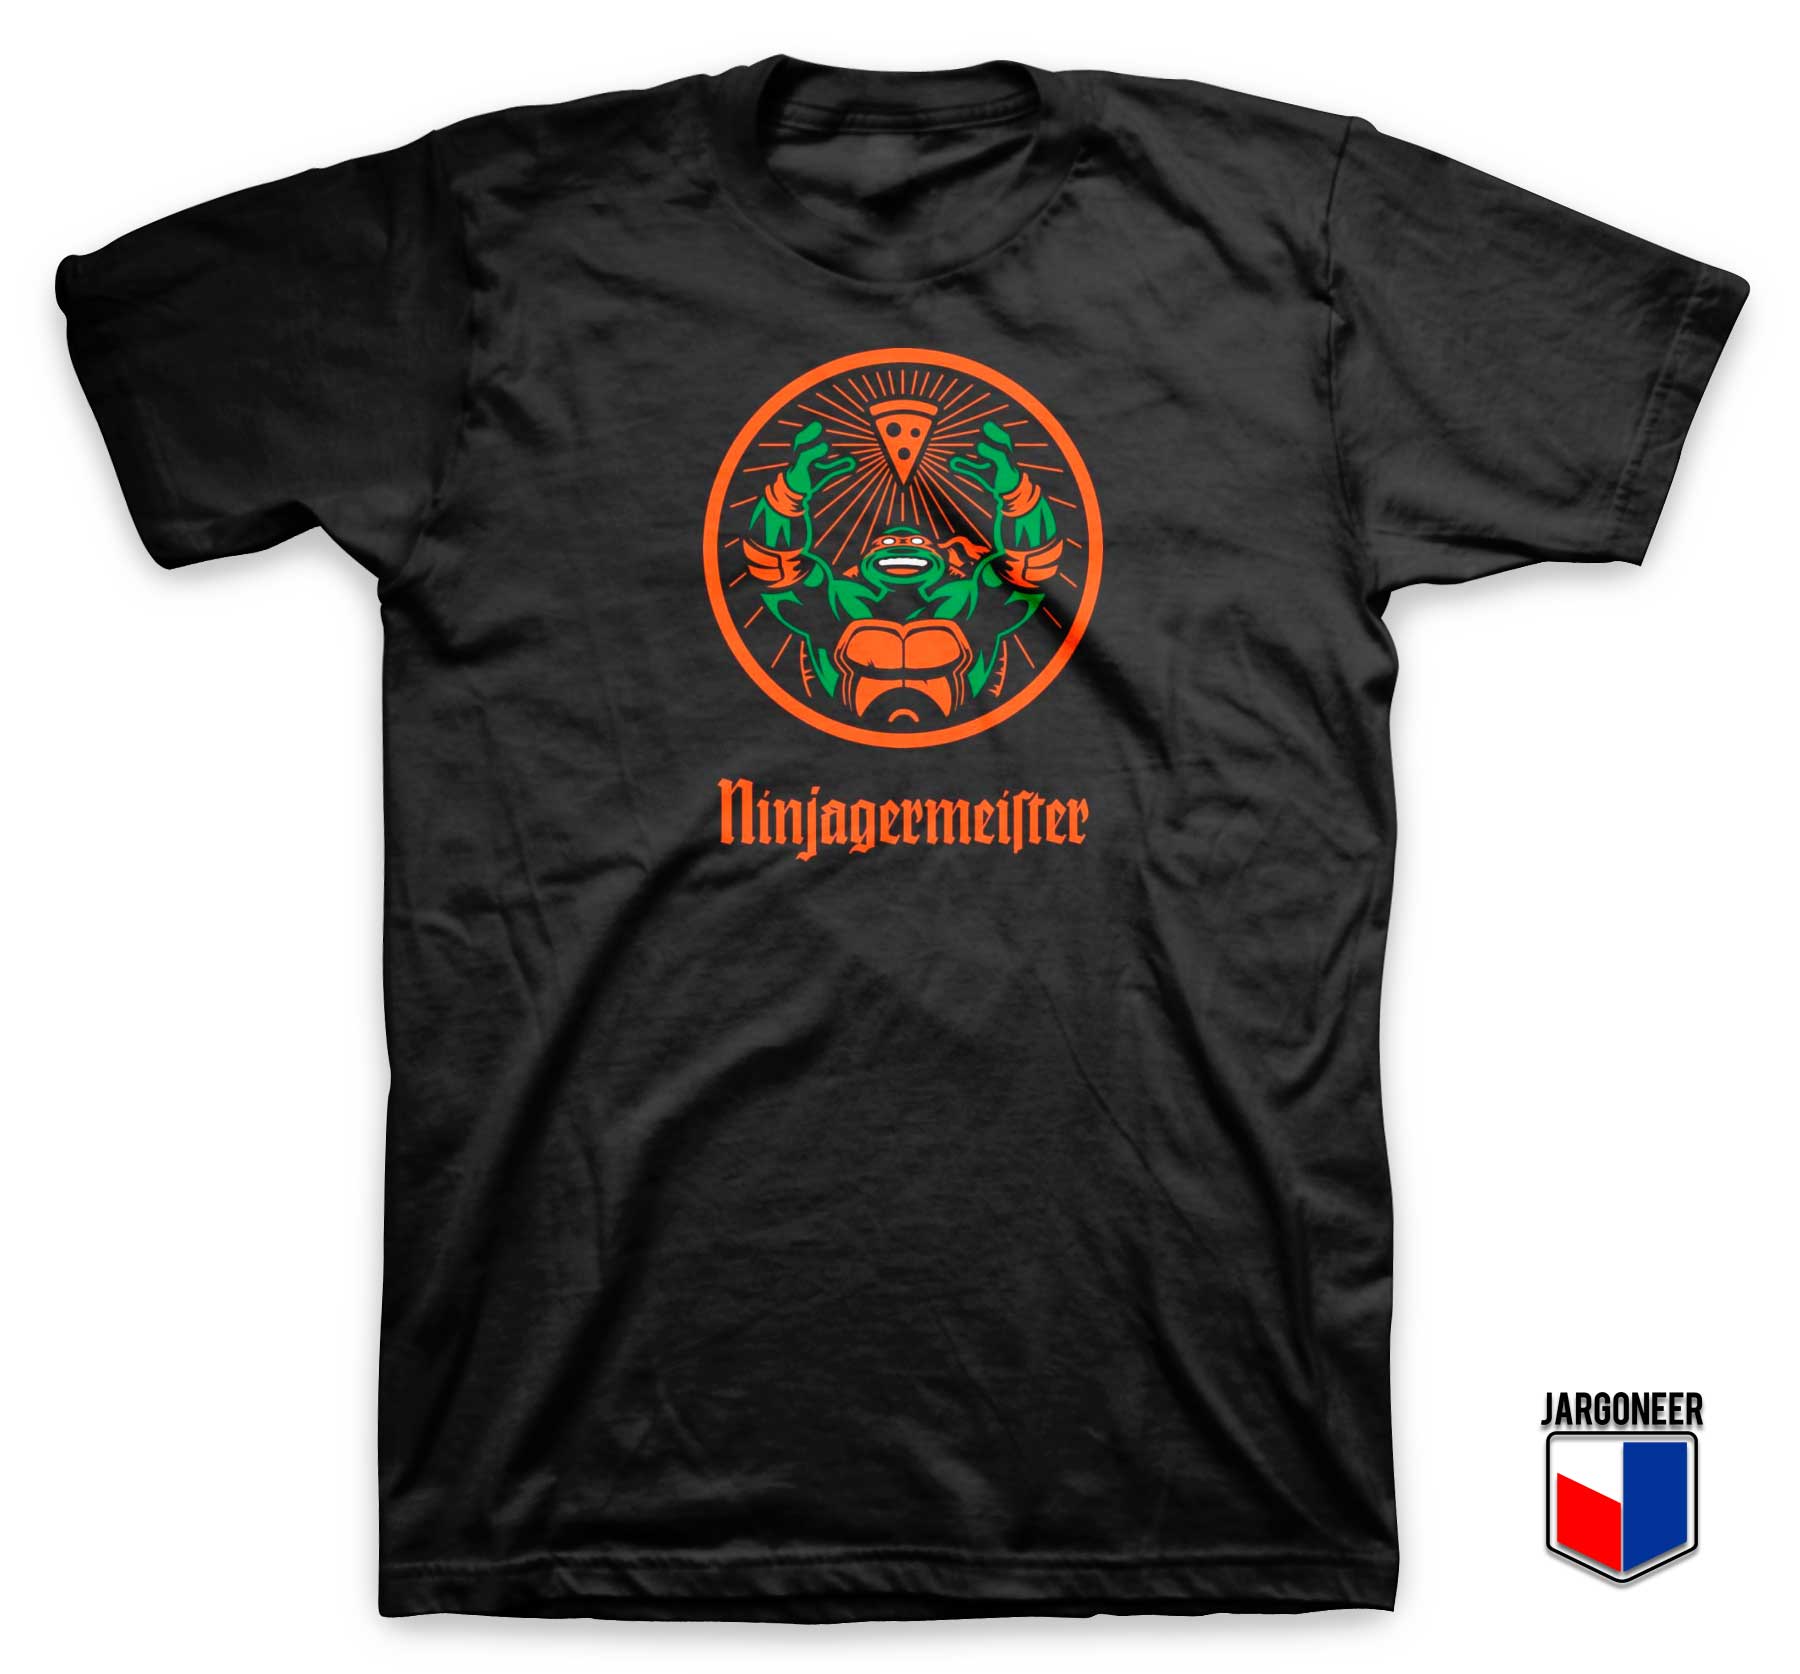 Mutant Ninjagermeister Parody T Shirt - Shop Unique Graphic Cool Shirt Designs